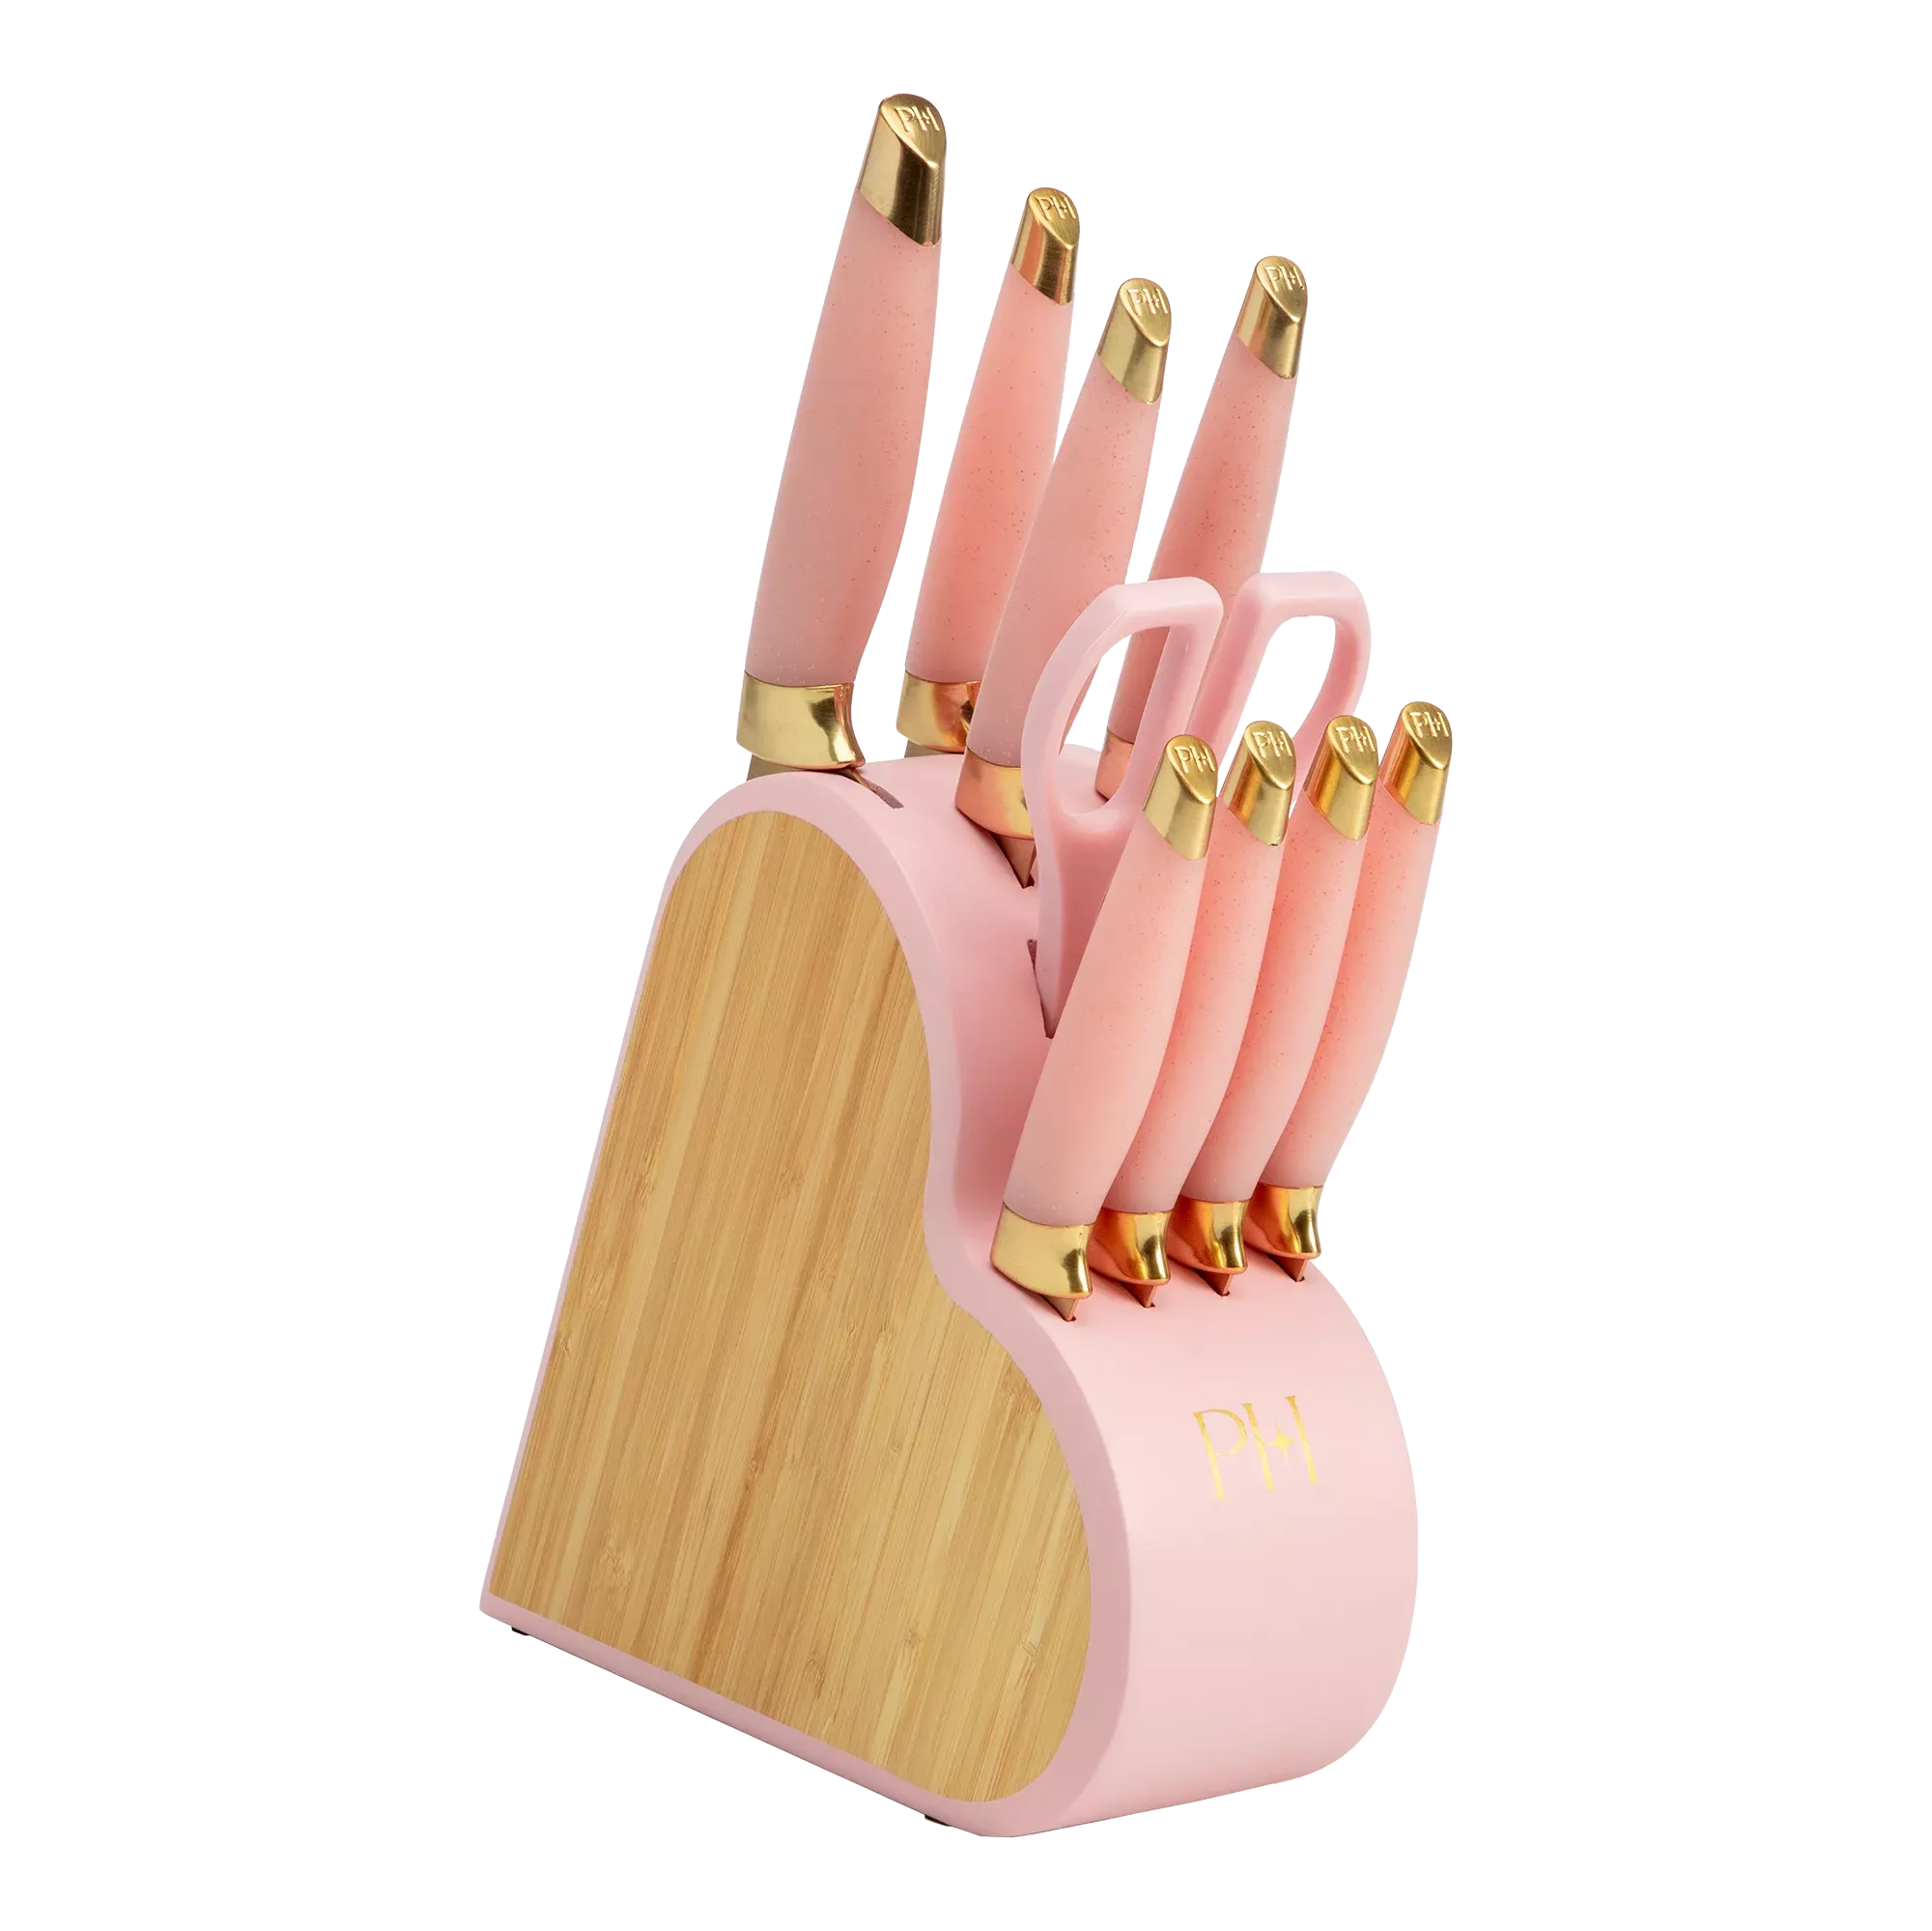 Paris Hilton PH11579-AS Clean Ceramic Nonstick Cast Aluminum Cookware Set with Heart Shaped Lid Knobs, Pink